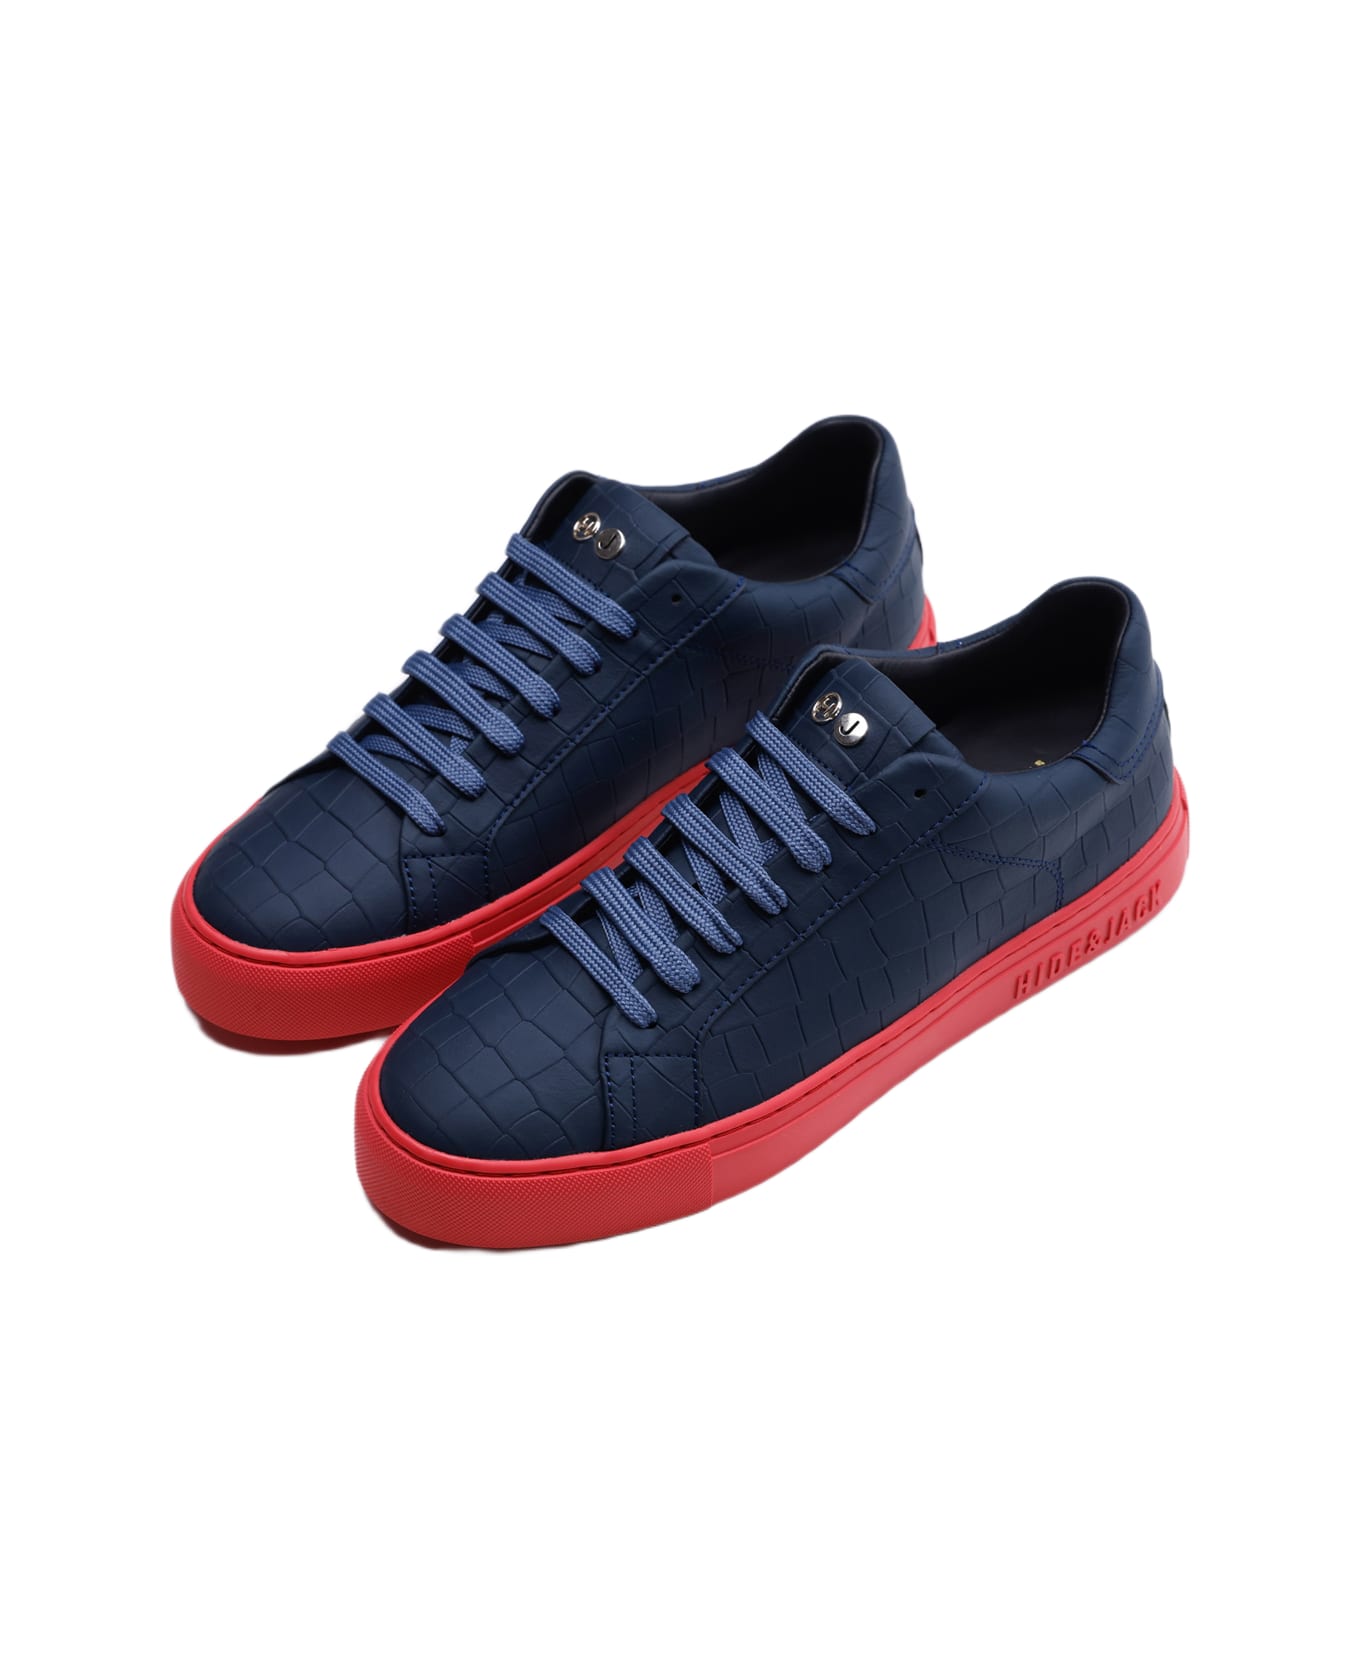 Hide&Jack Low Top Sneaker - Essence Blue Red スニーカー